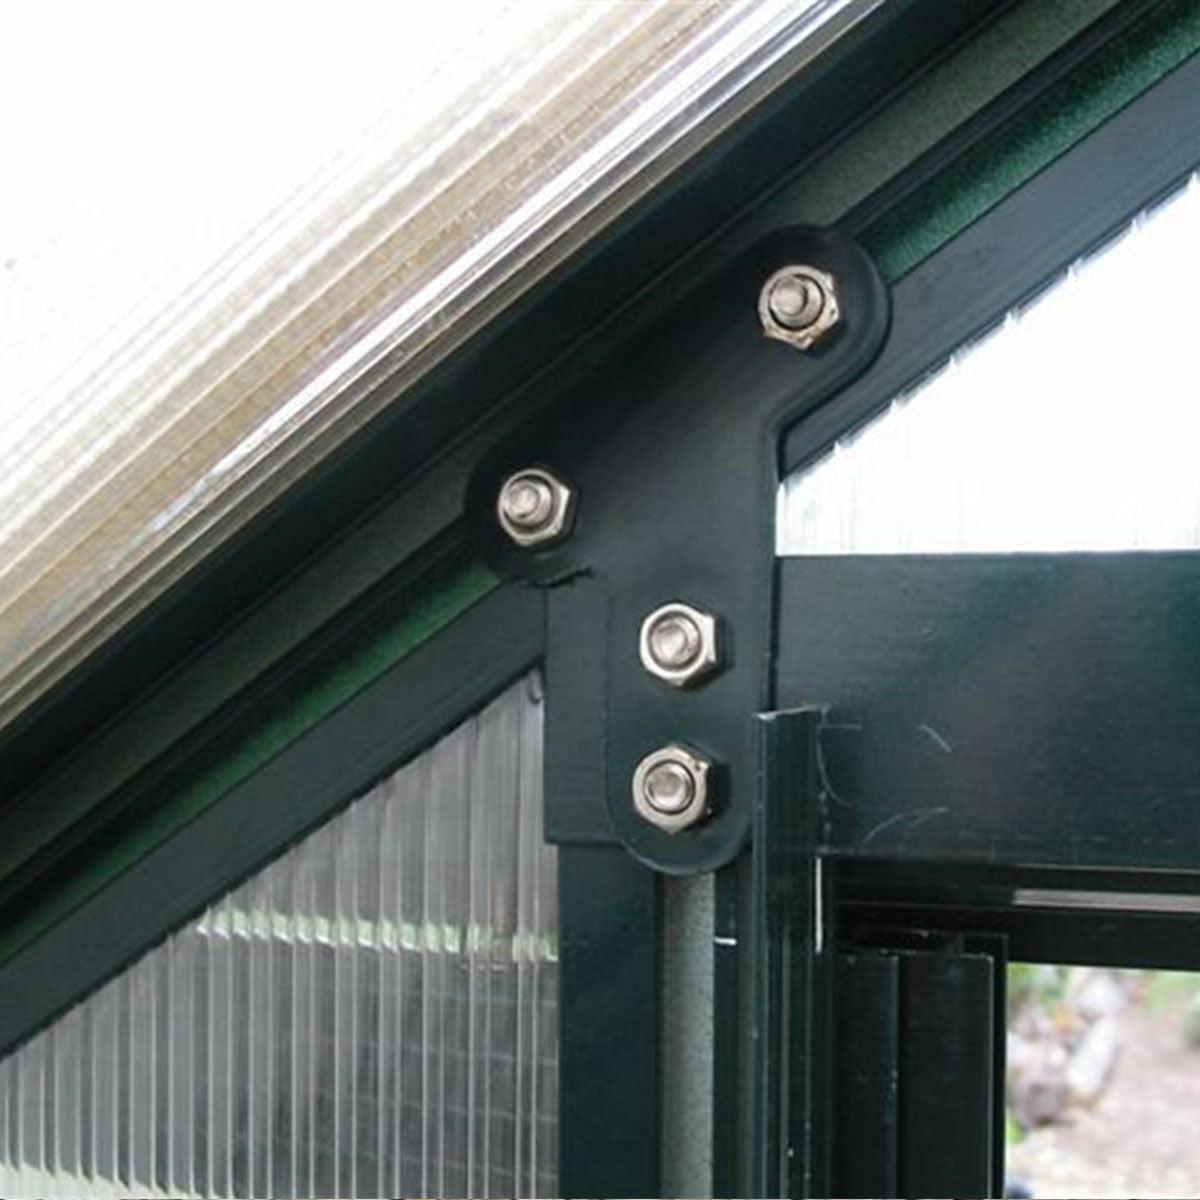 Polycarbonate & Aluminium Walk-in Greenhouse L381xW260cm Green (6mm Panel)